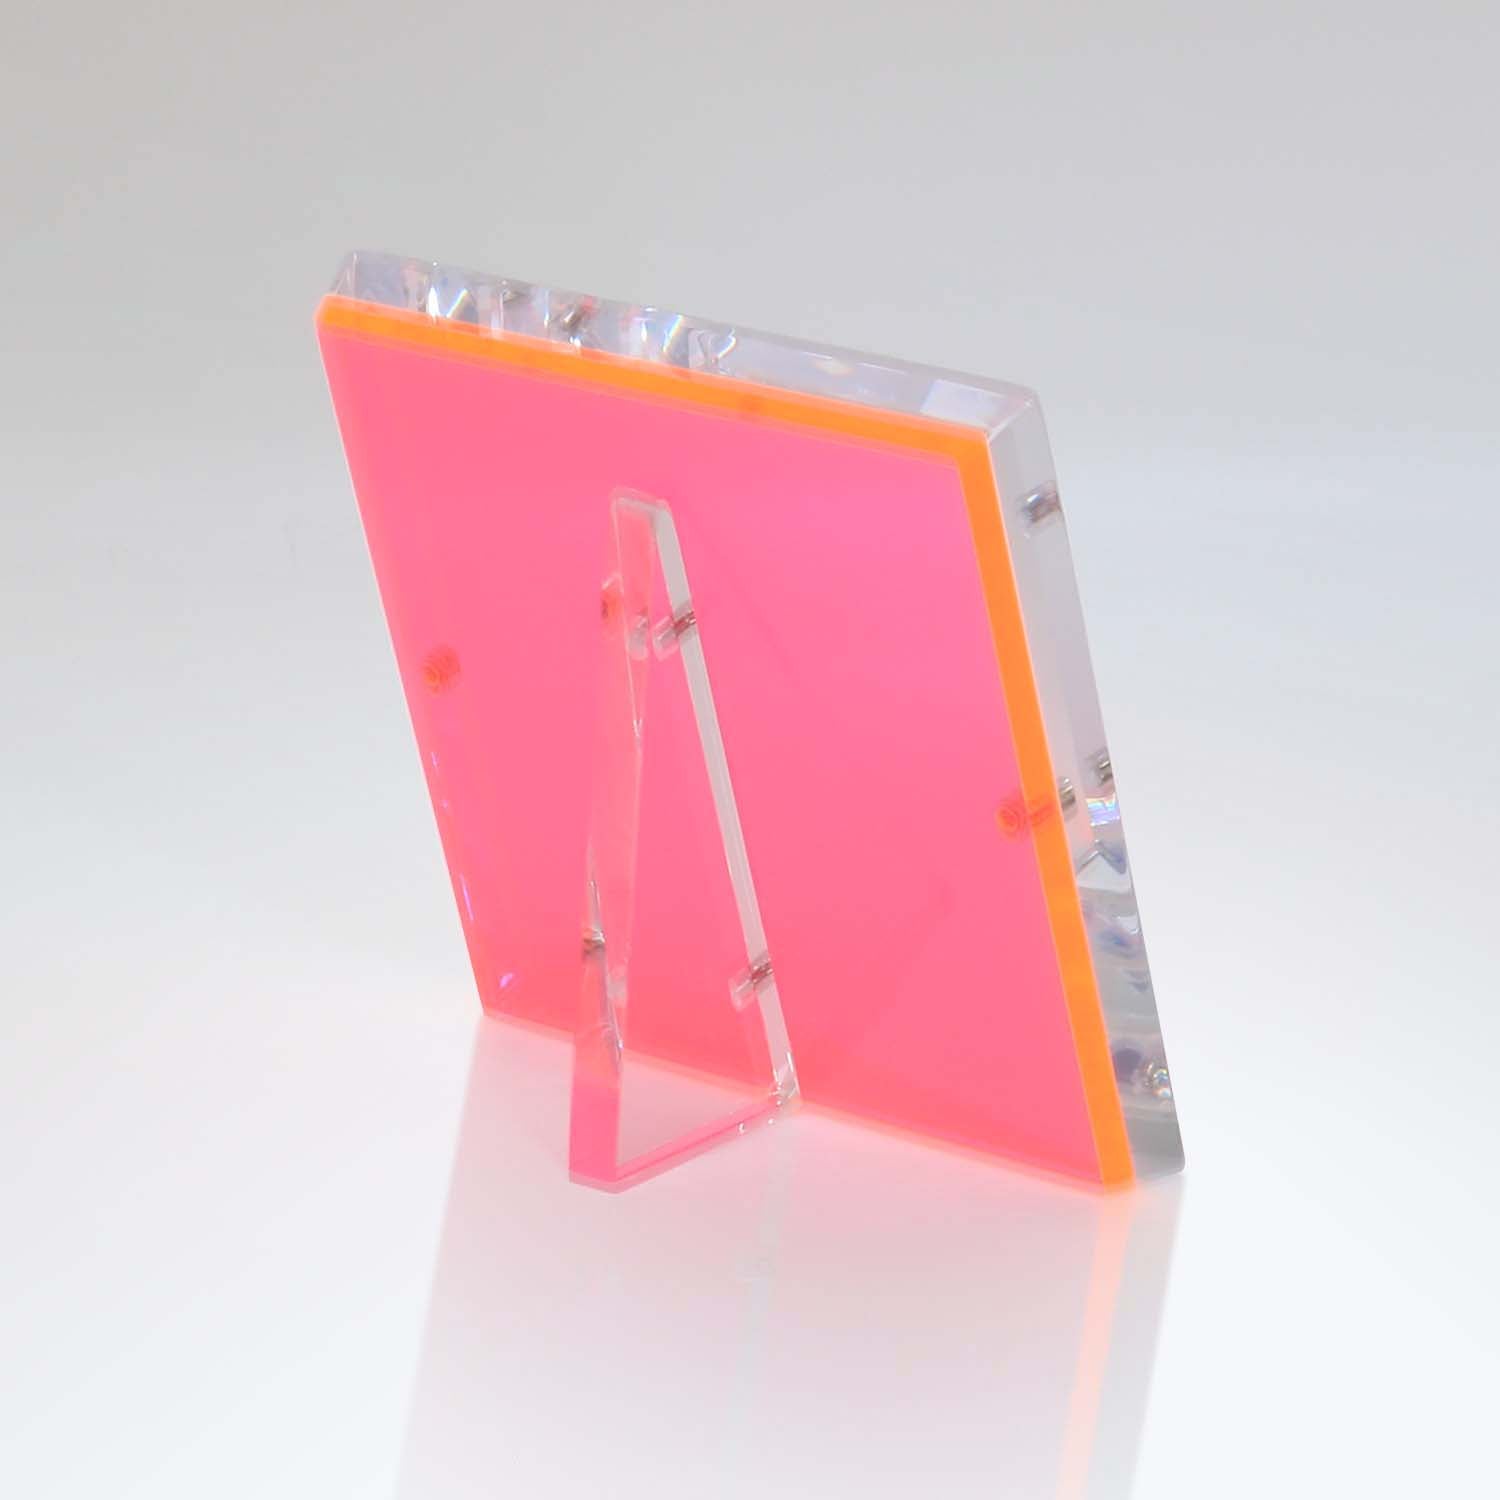 Neon pink acrylic sign holder in modern L-shape design.